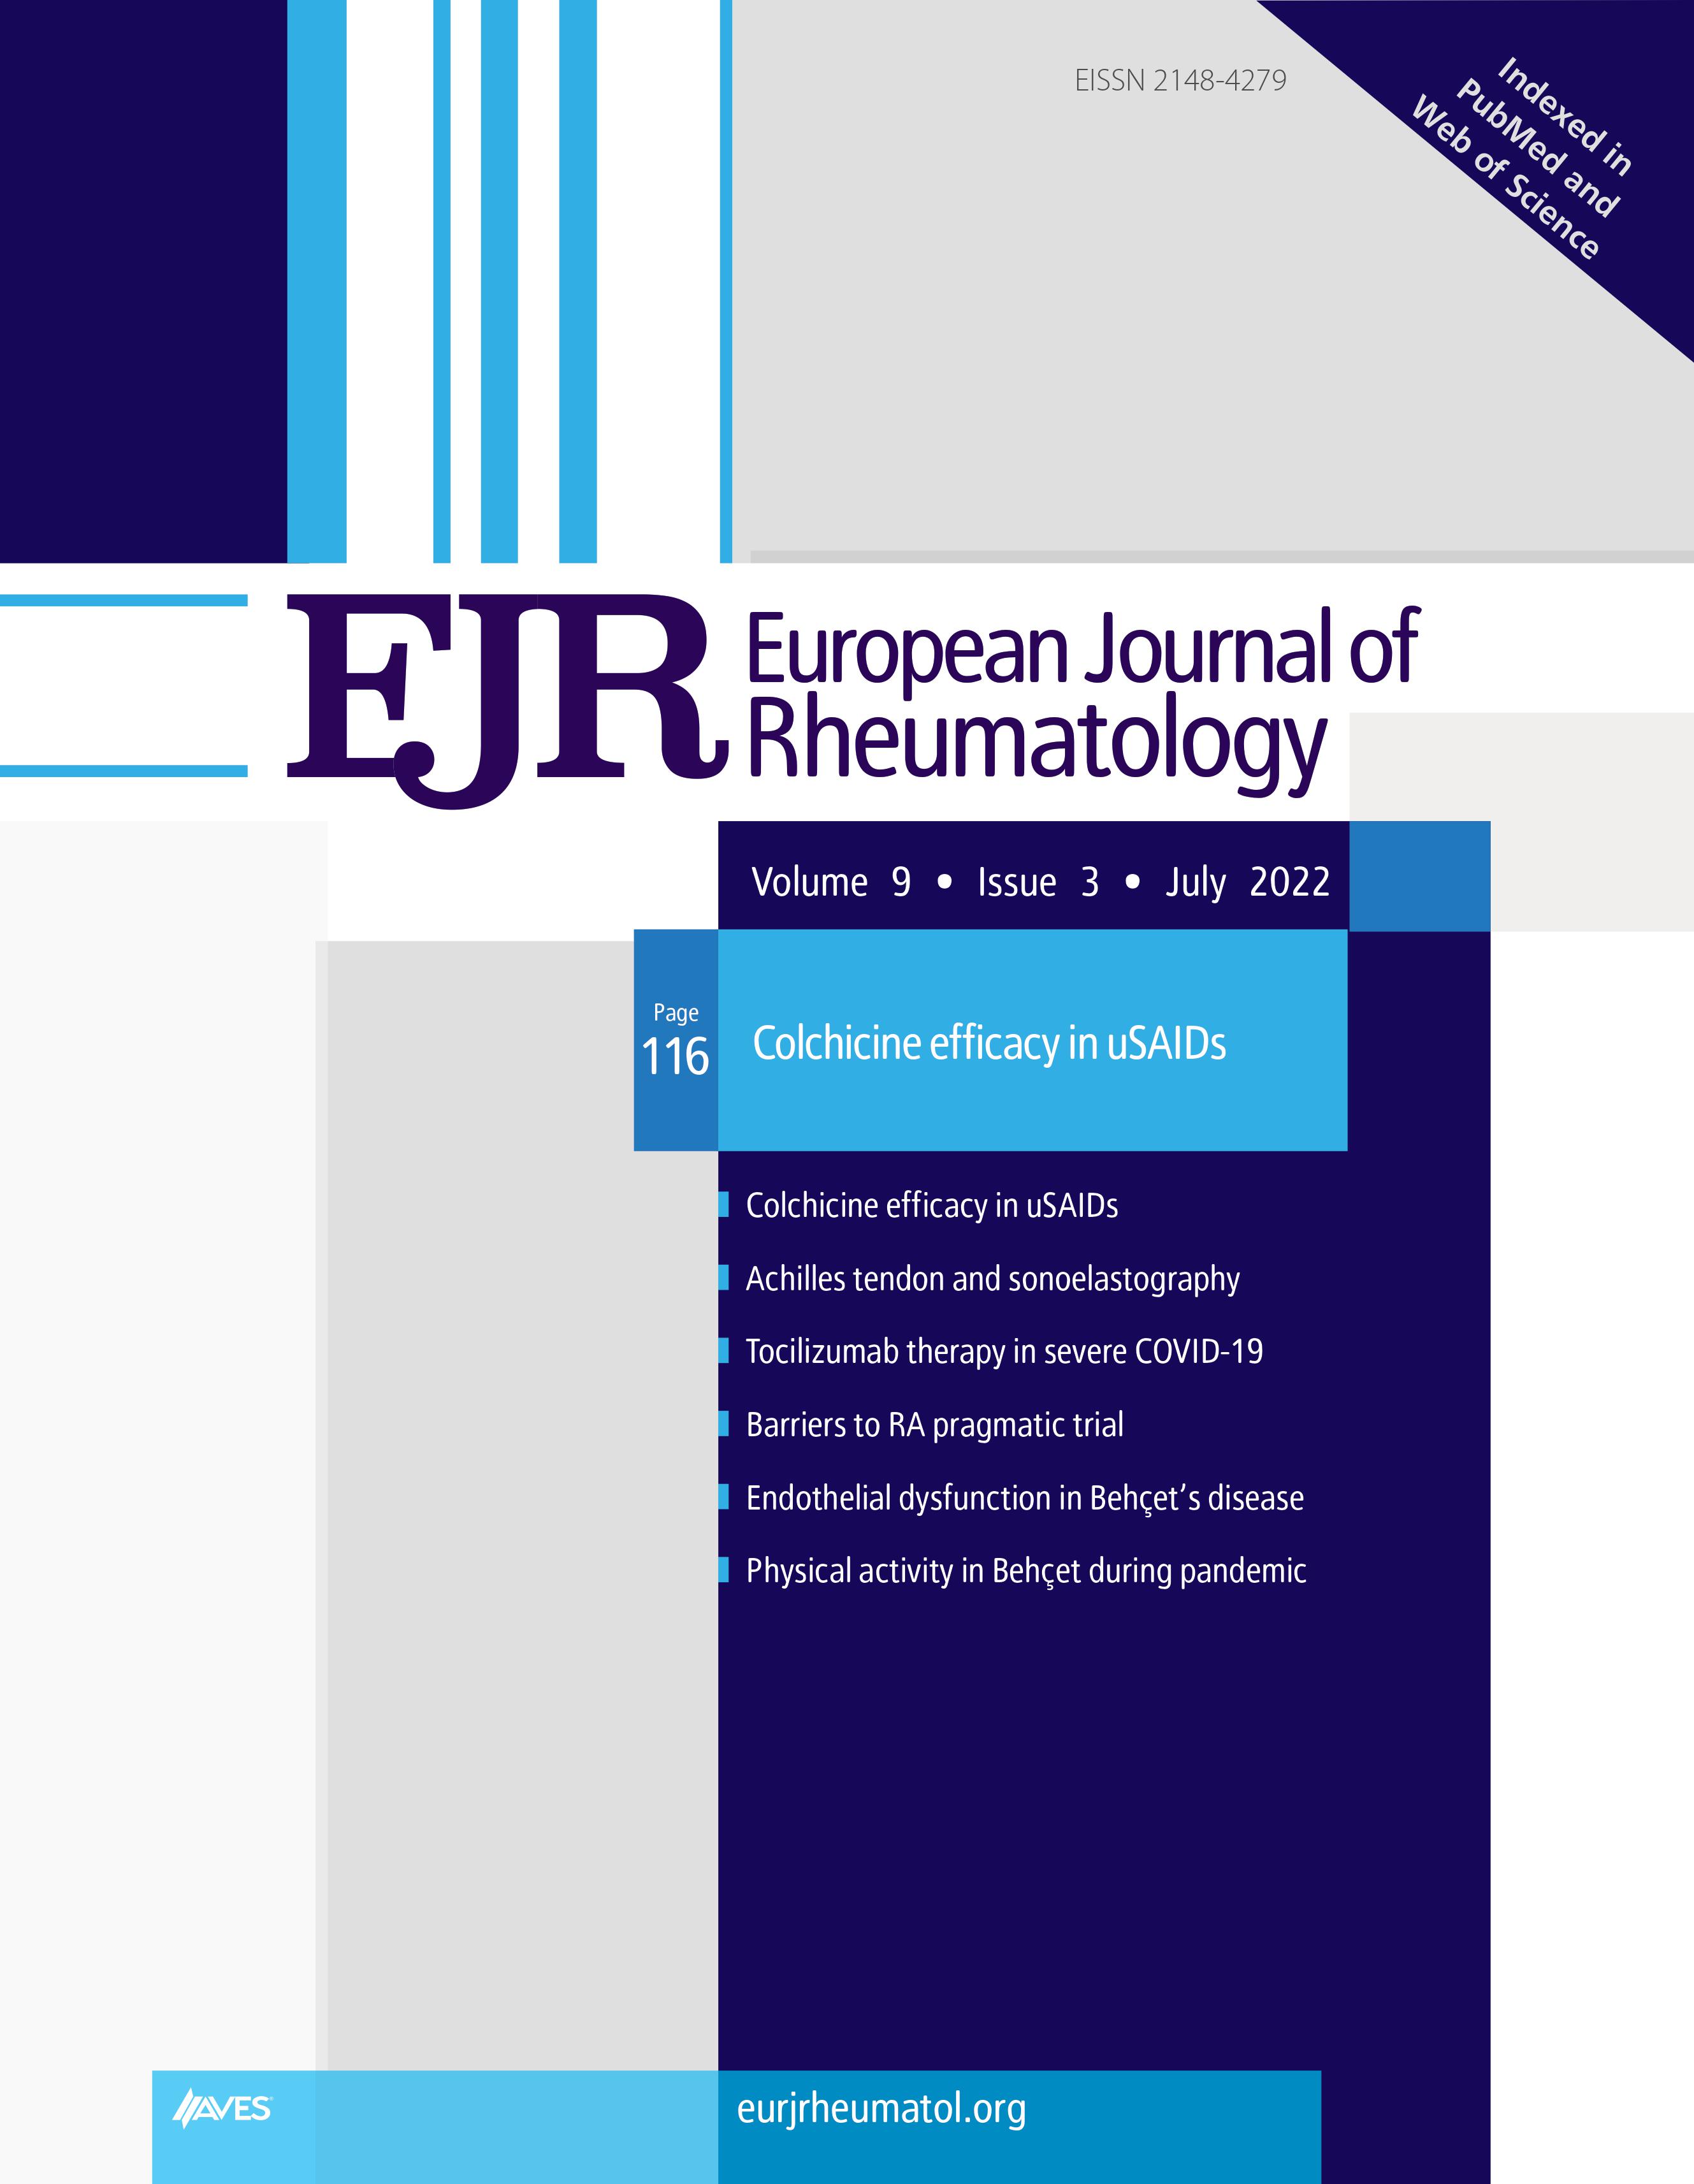 European Journal of Rheumatology